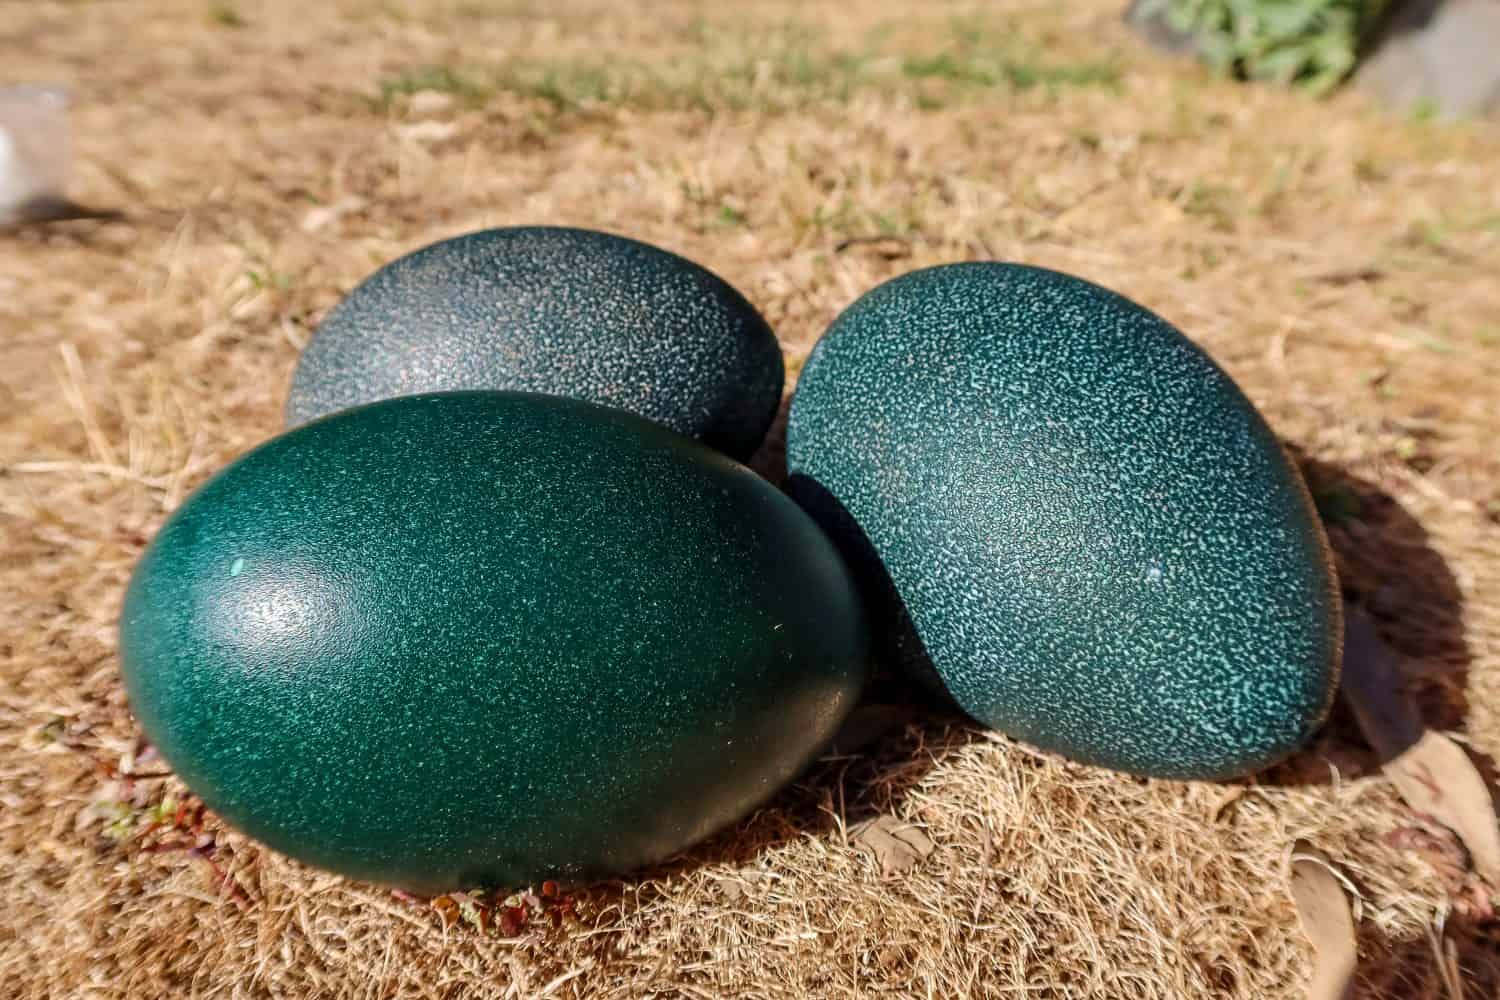 Three green emu eggs on the ground. Australia.